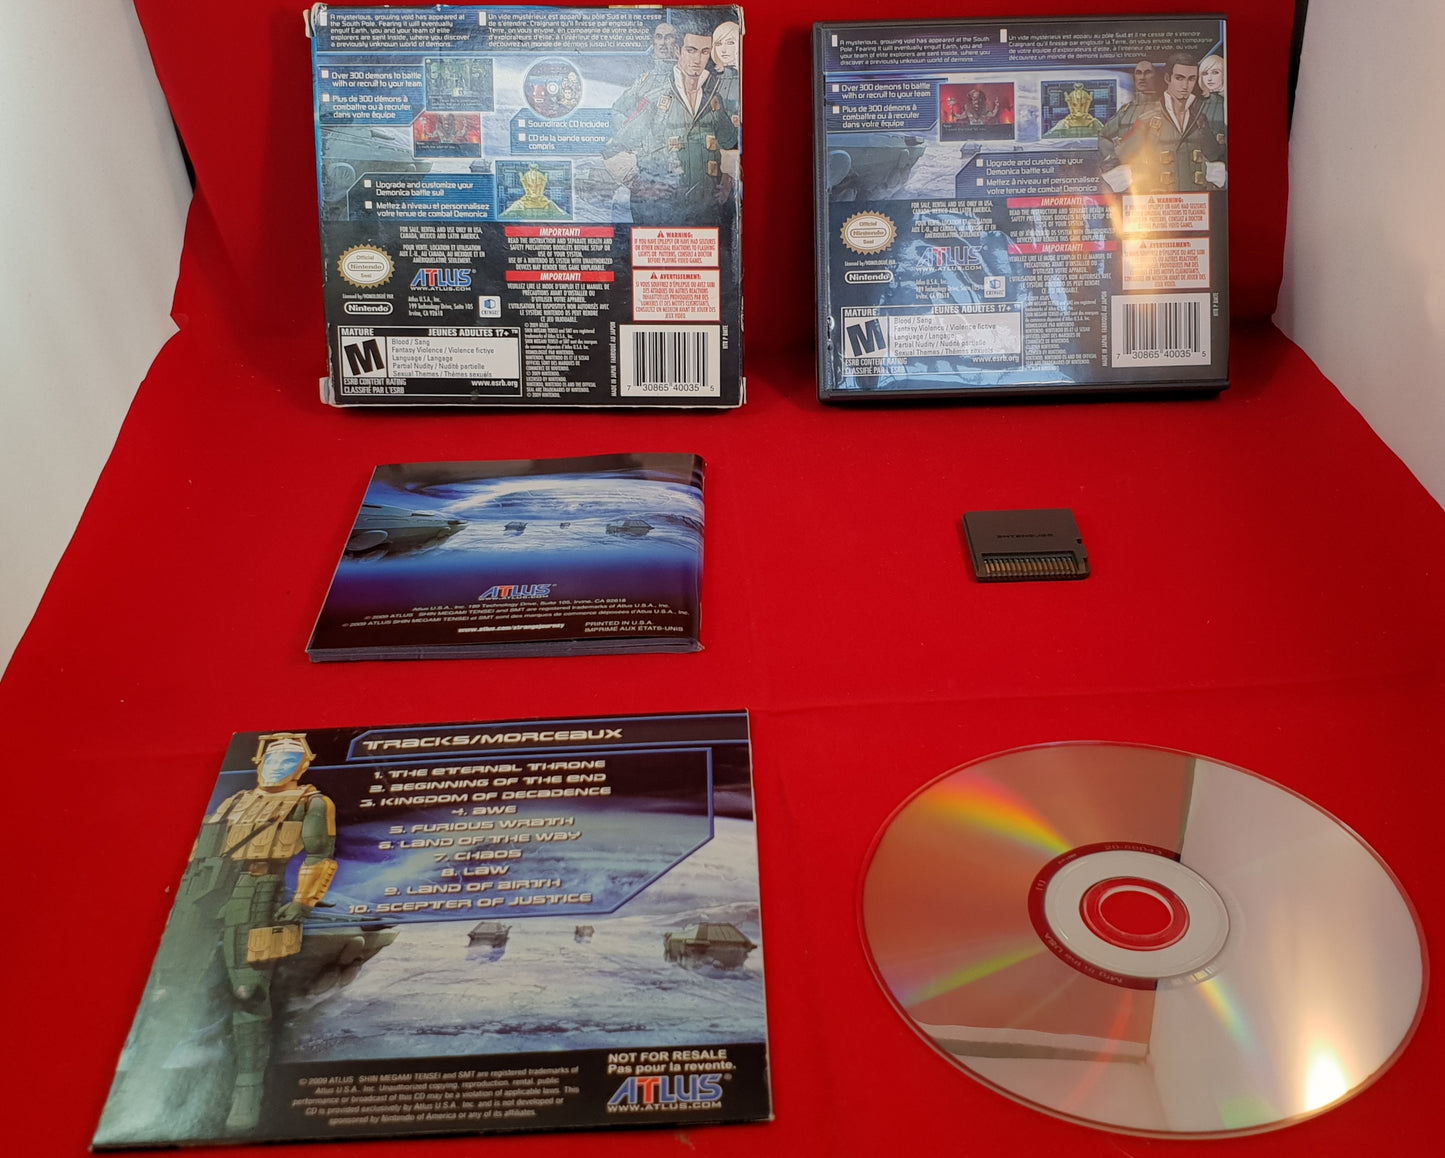 Shin Megami Tensei Strange Journey Nintendo DS Game complete with cd